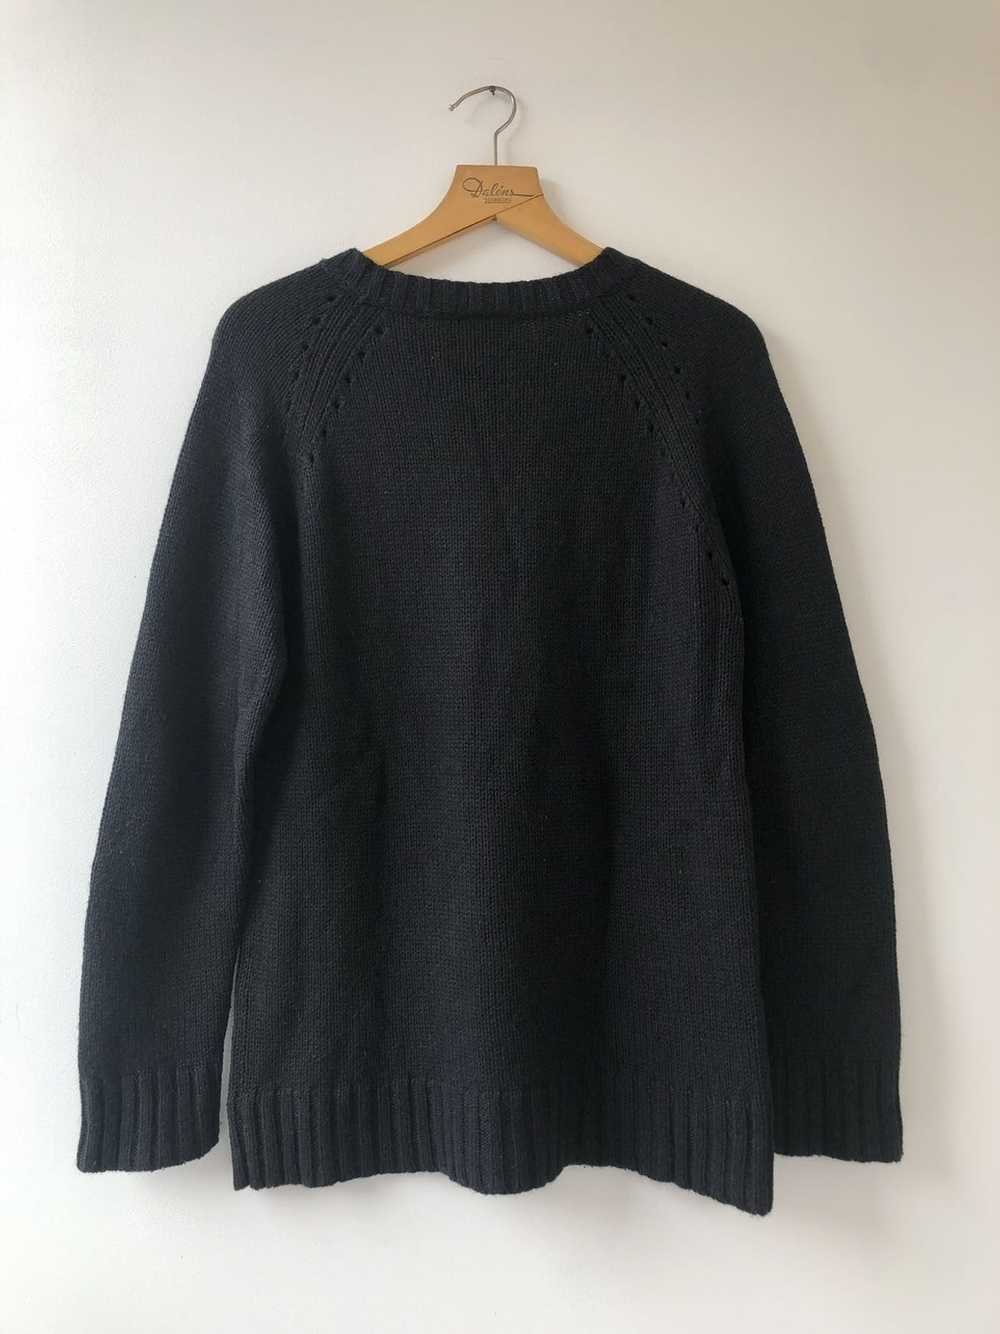 Marimekko Marimekko wool angora blend knit sweater - image 2